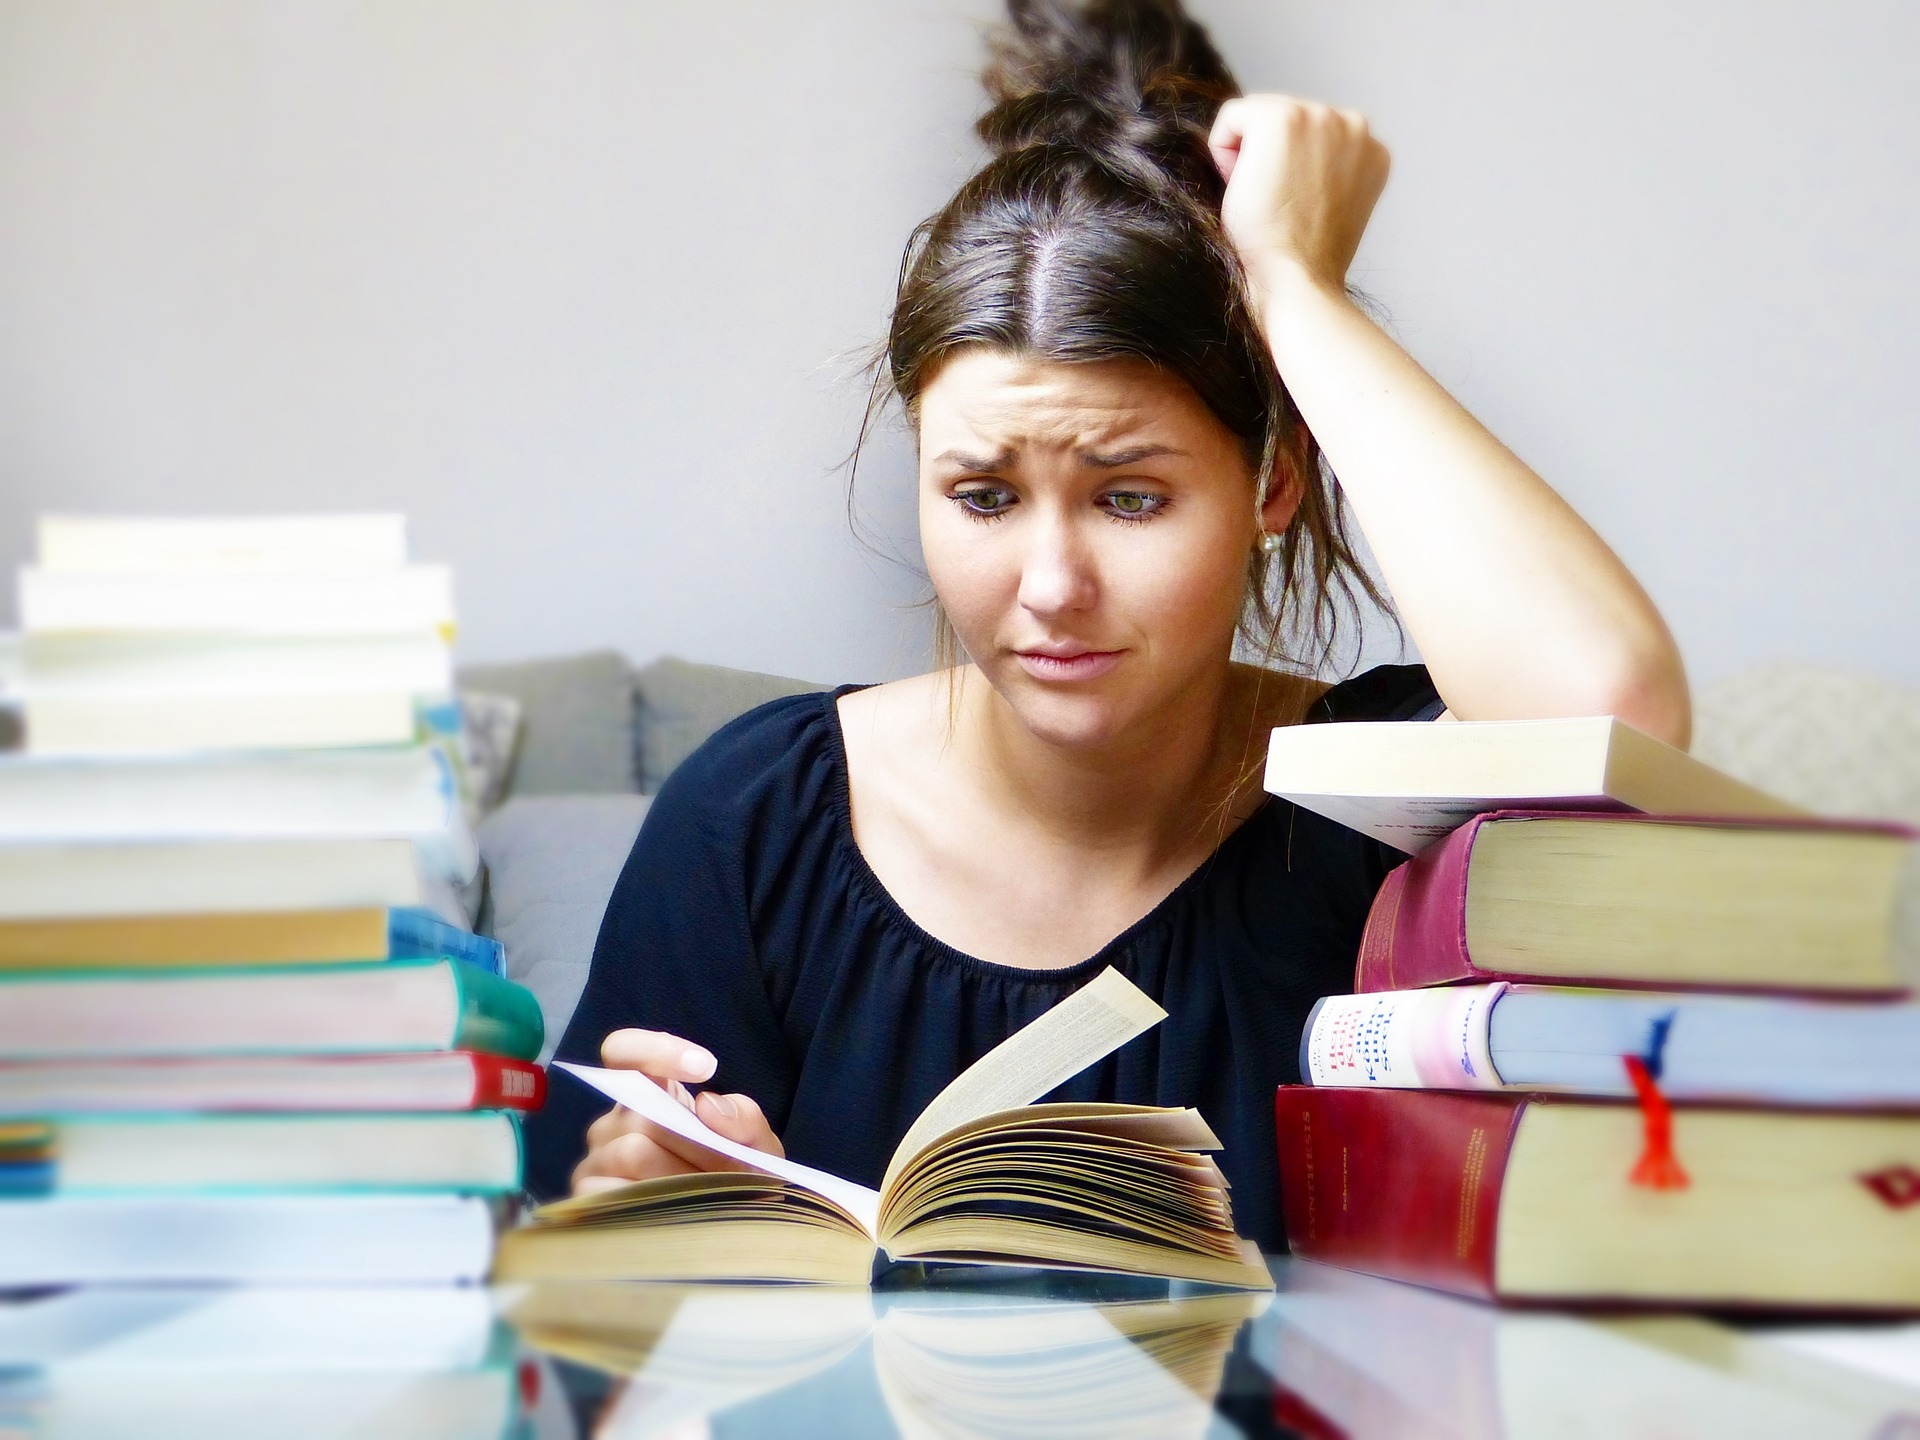 can homework causes stress